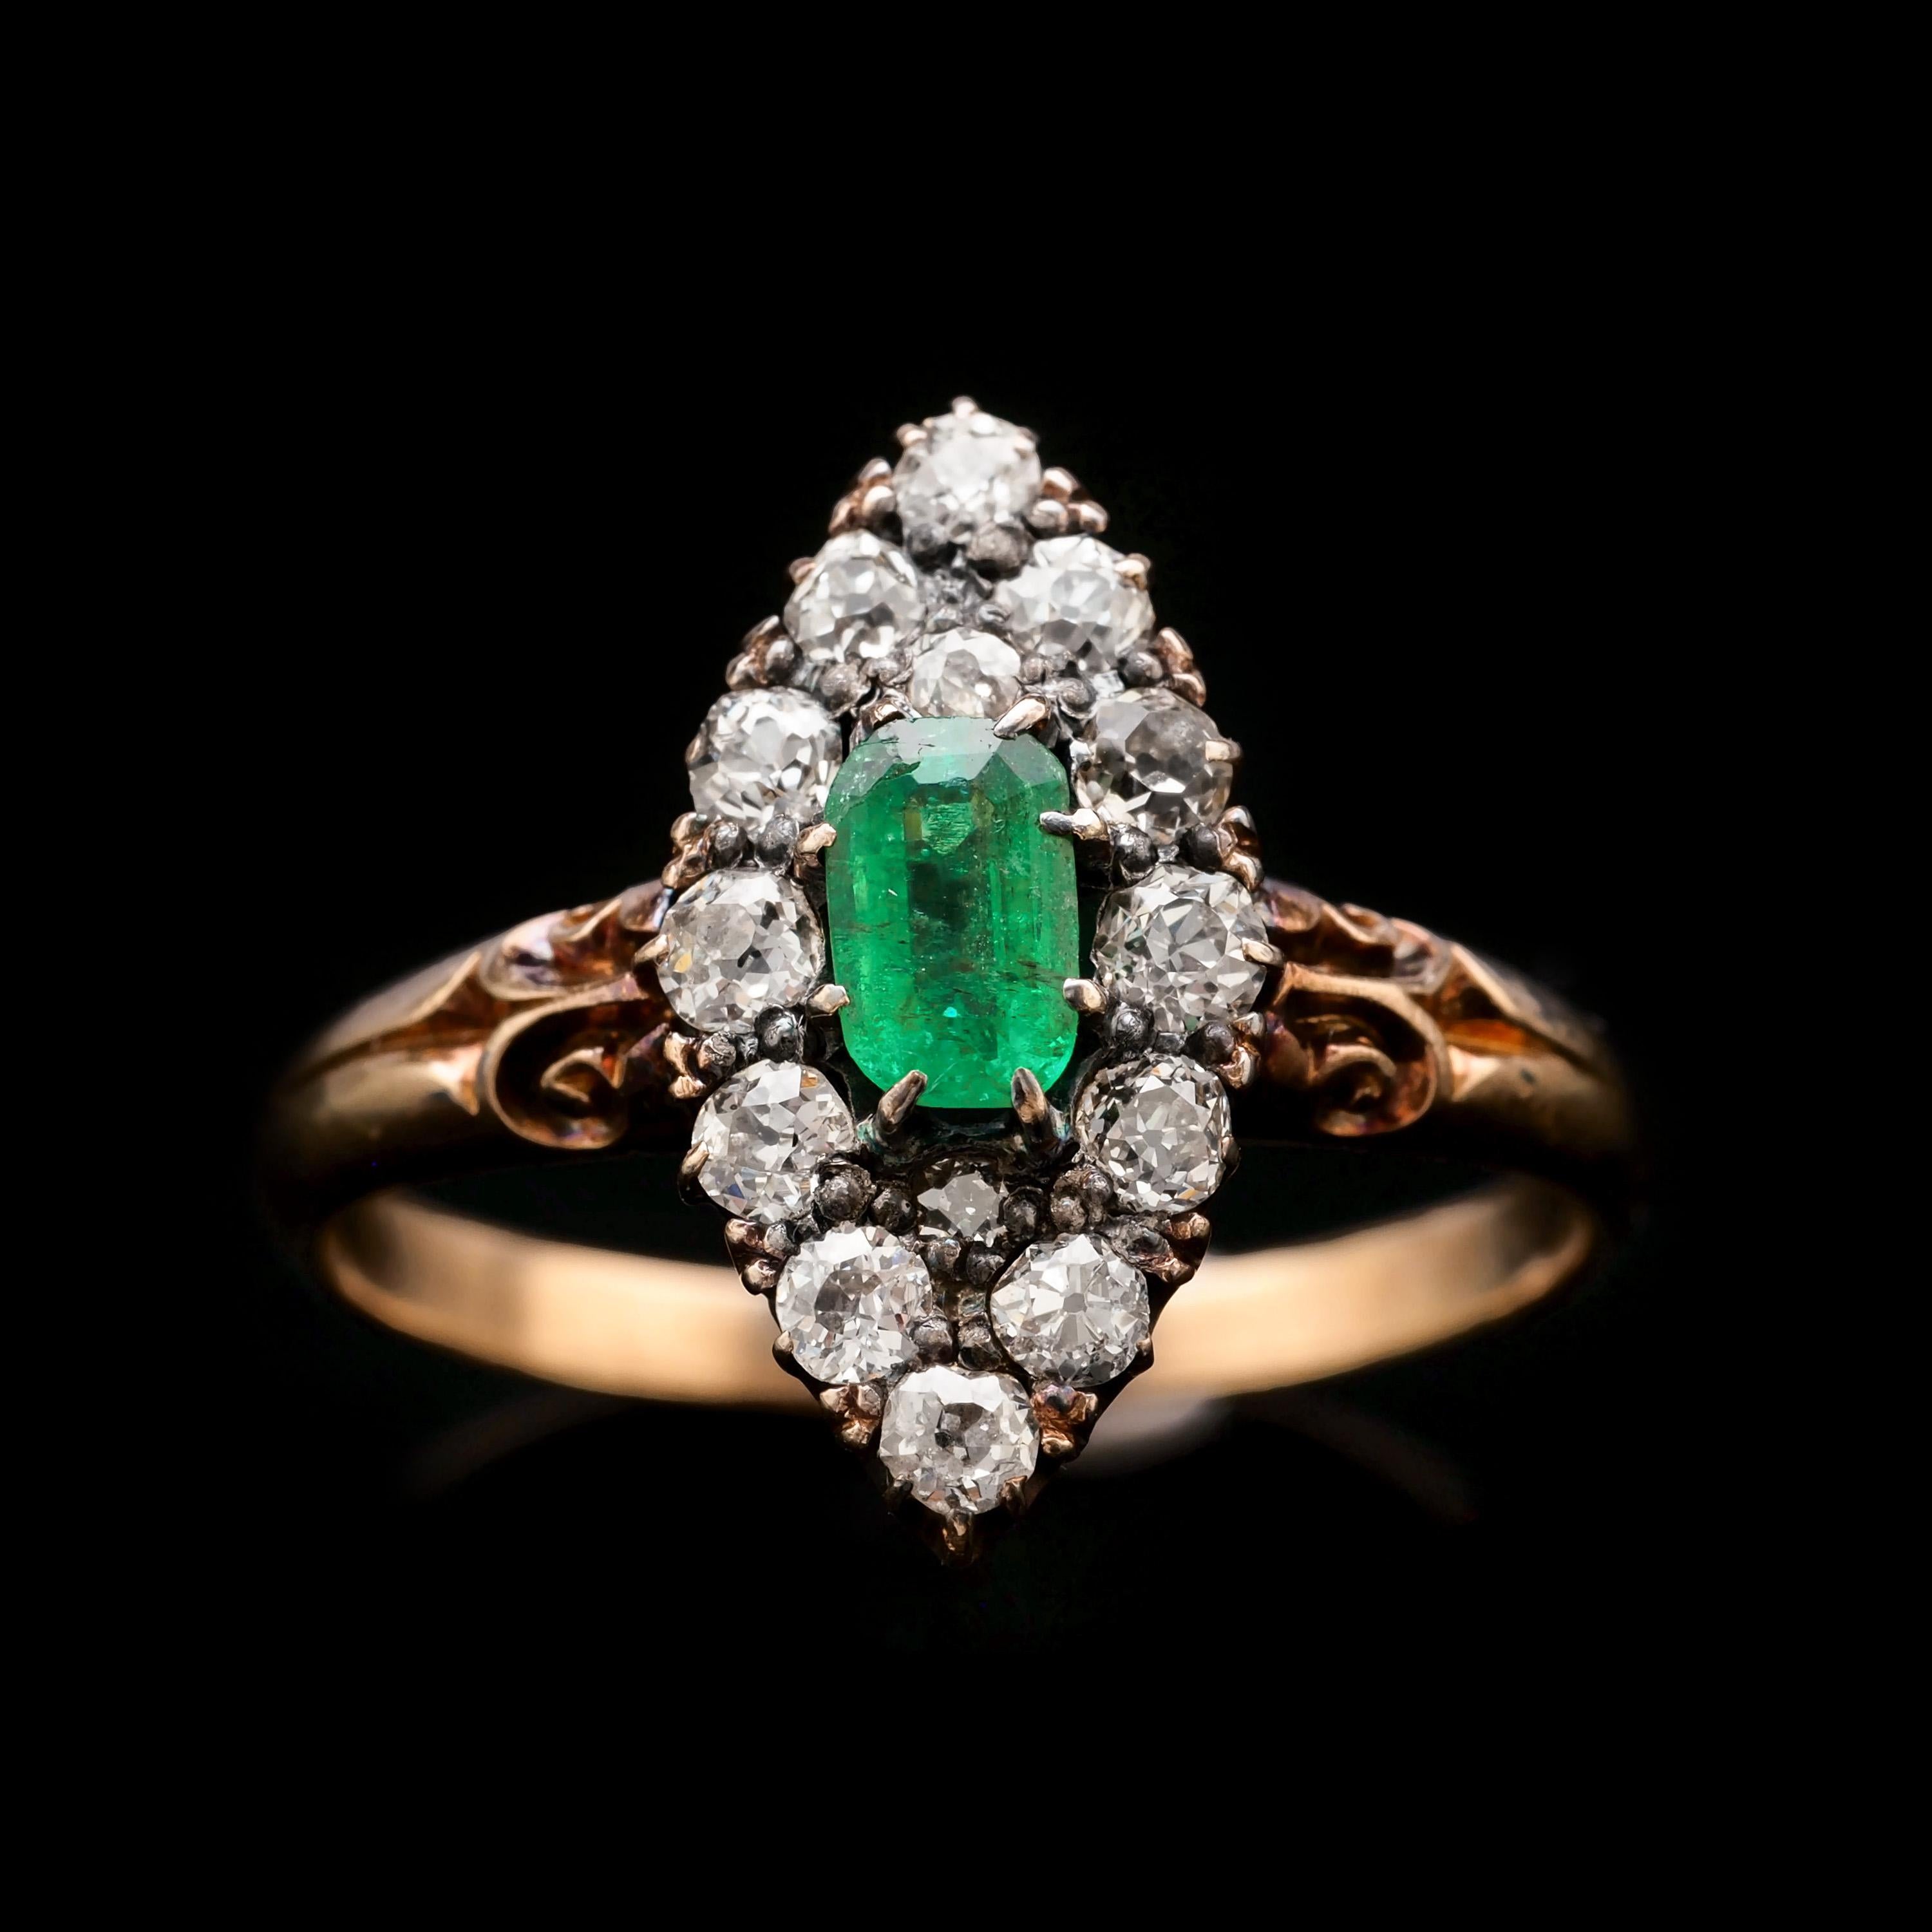 Antique Victorian 18K Gold Emerald & Diamond Navette Cluster Ring - c.1880 For Sale 4